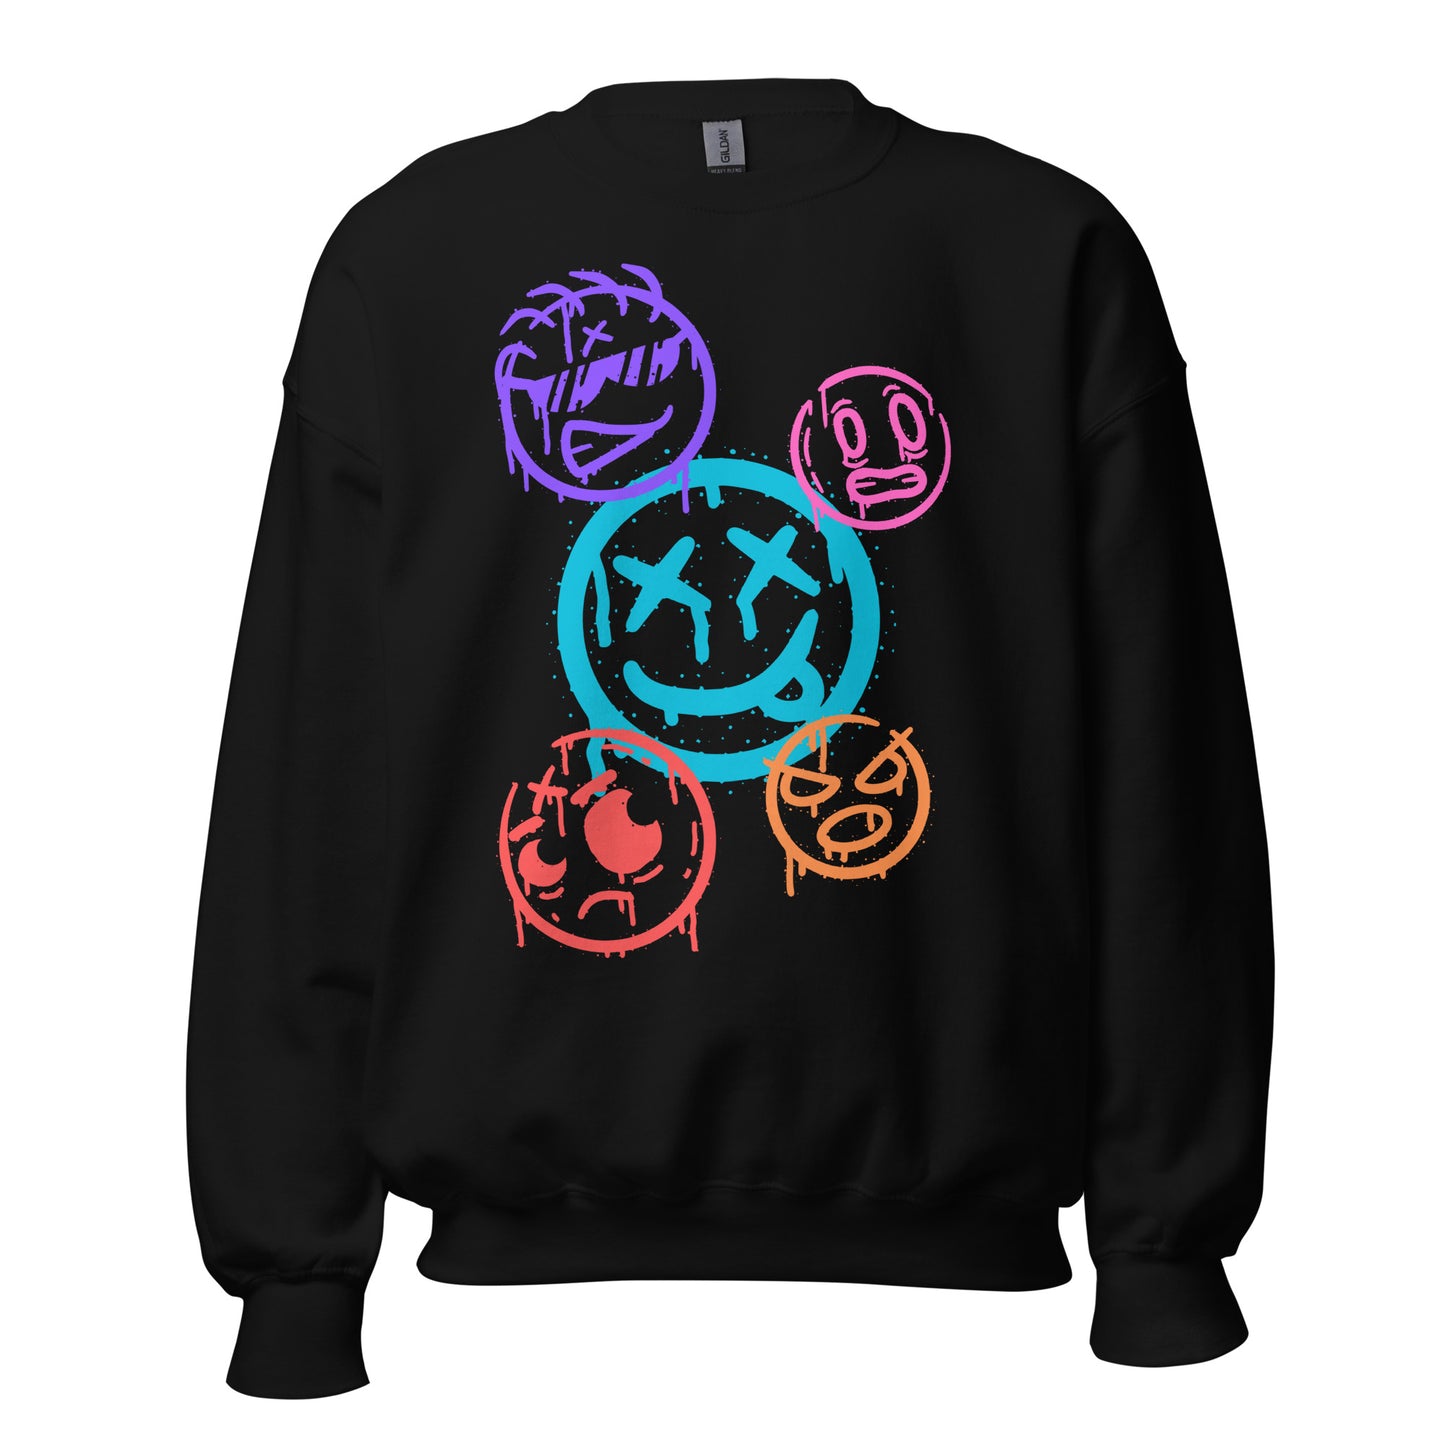 Graffiti Smiley Faces - Unisex Sweatshirt